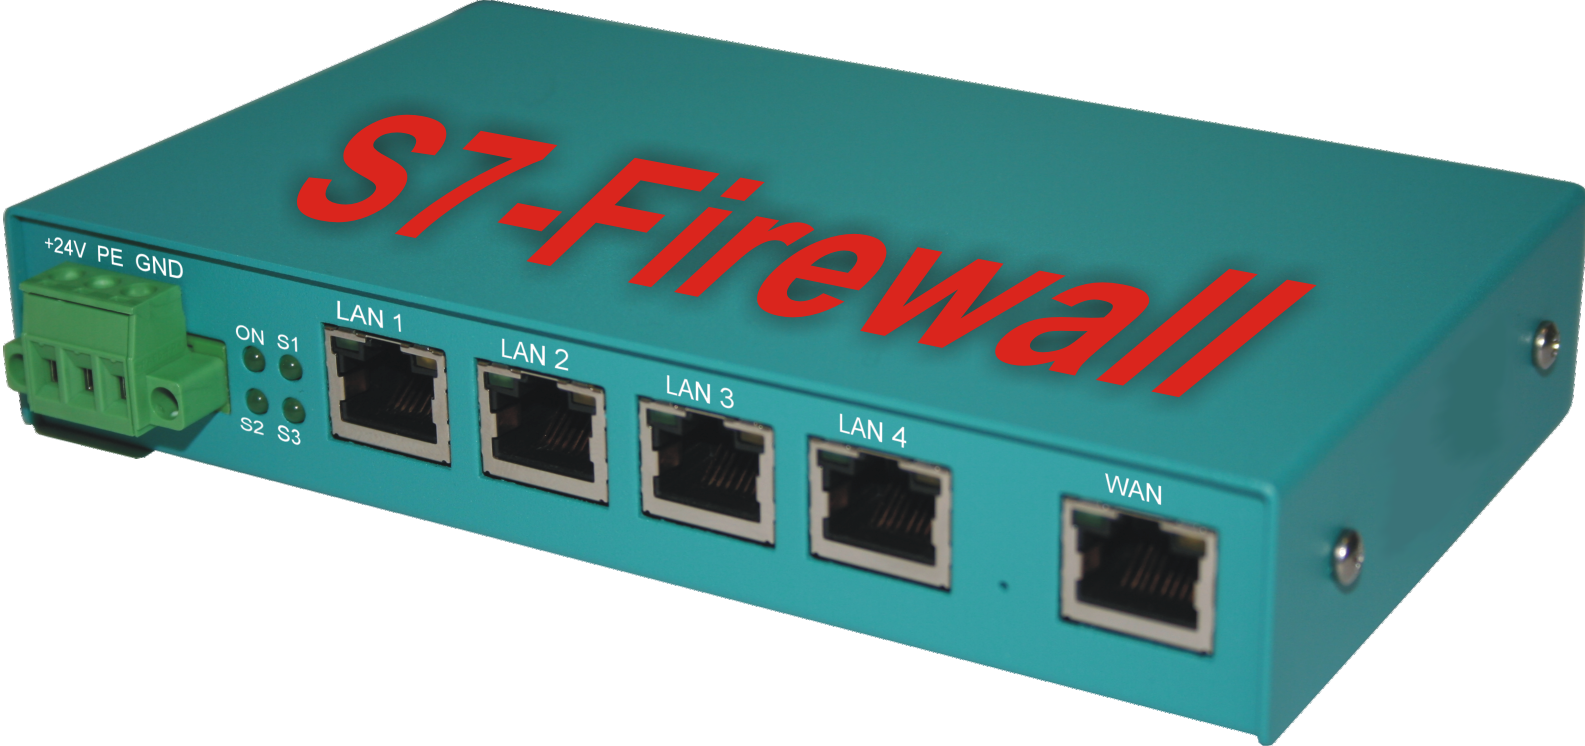 firewall router